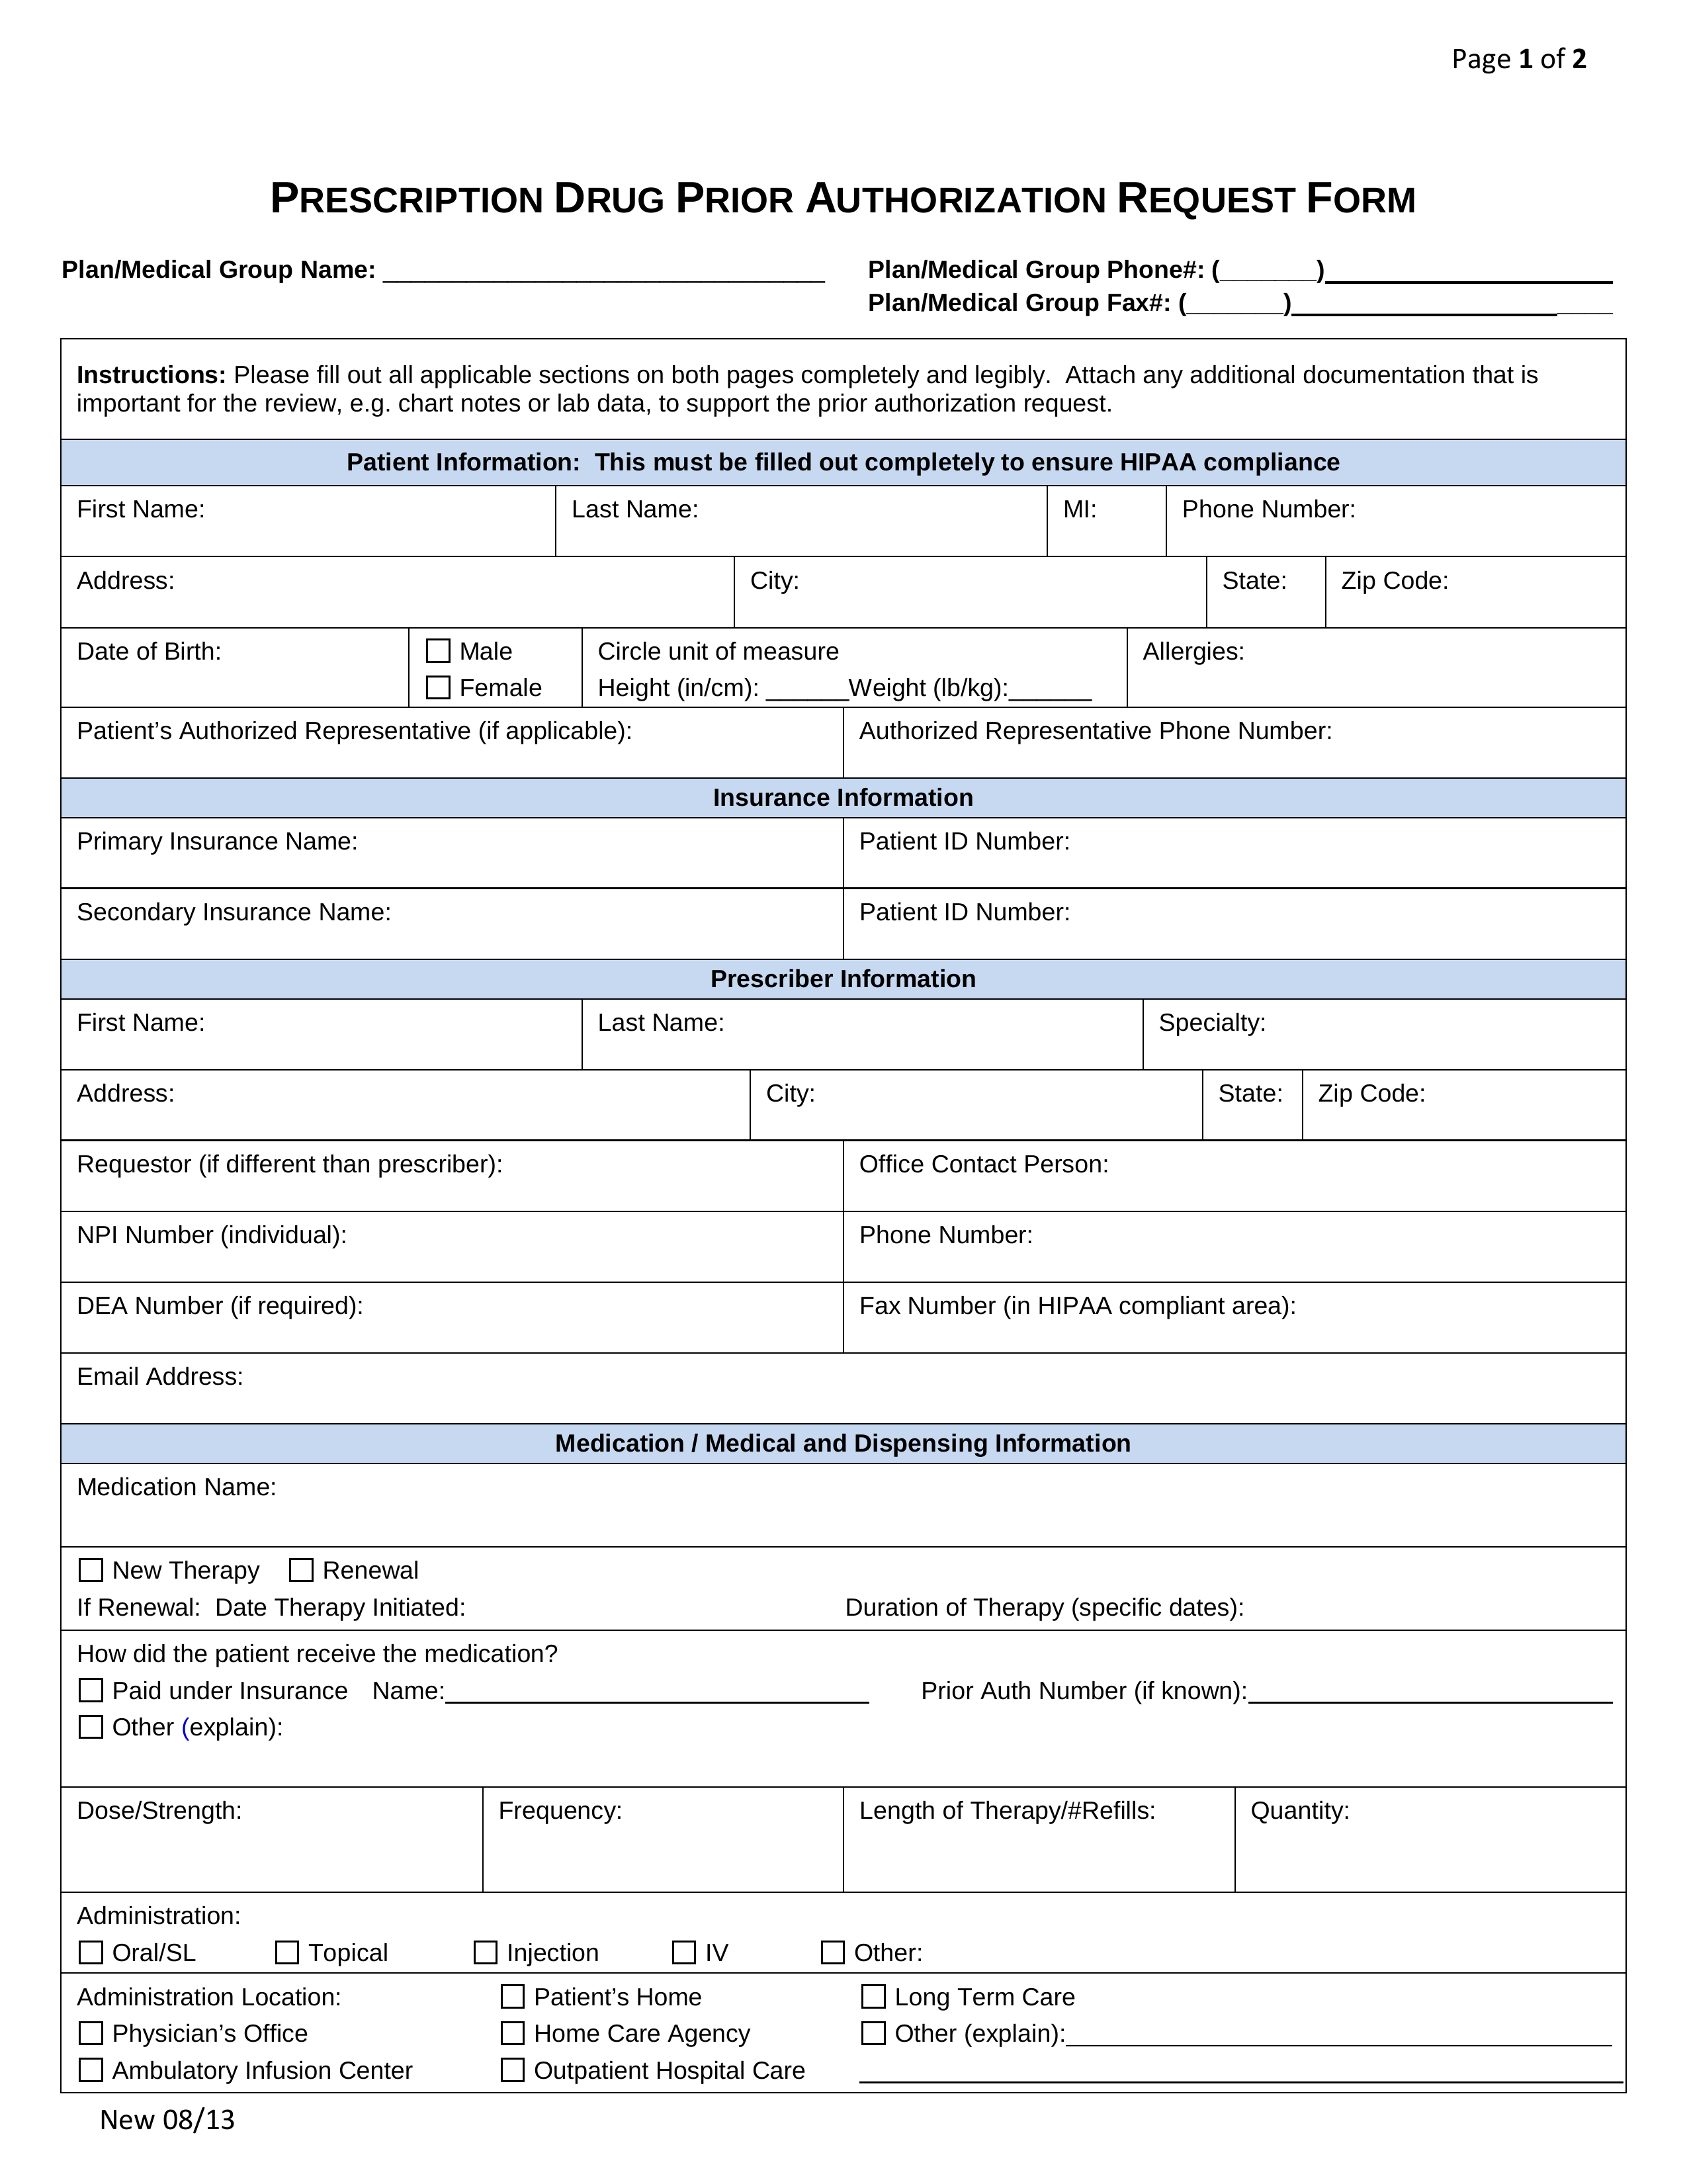 Free Prior Rx Authorization Forms PDF EForms